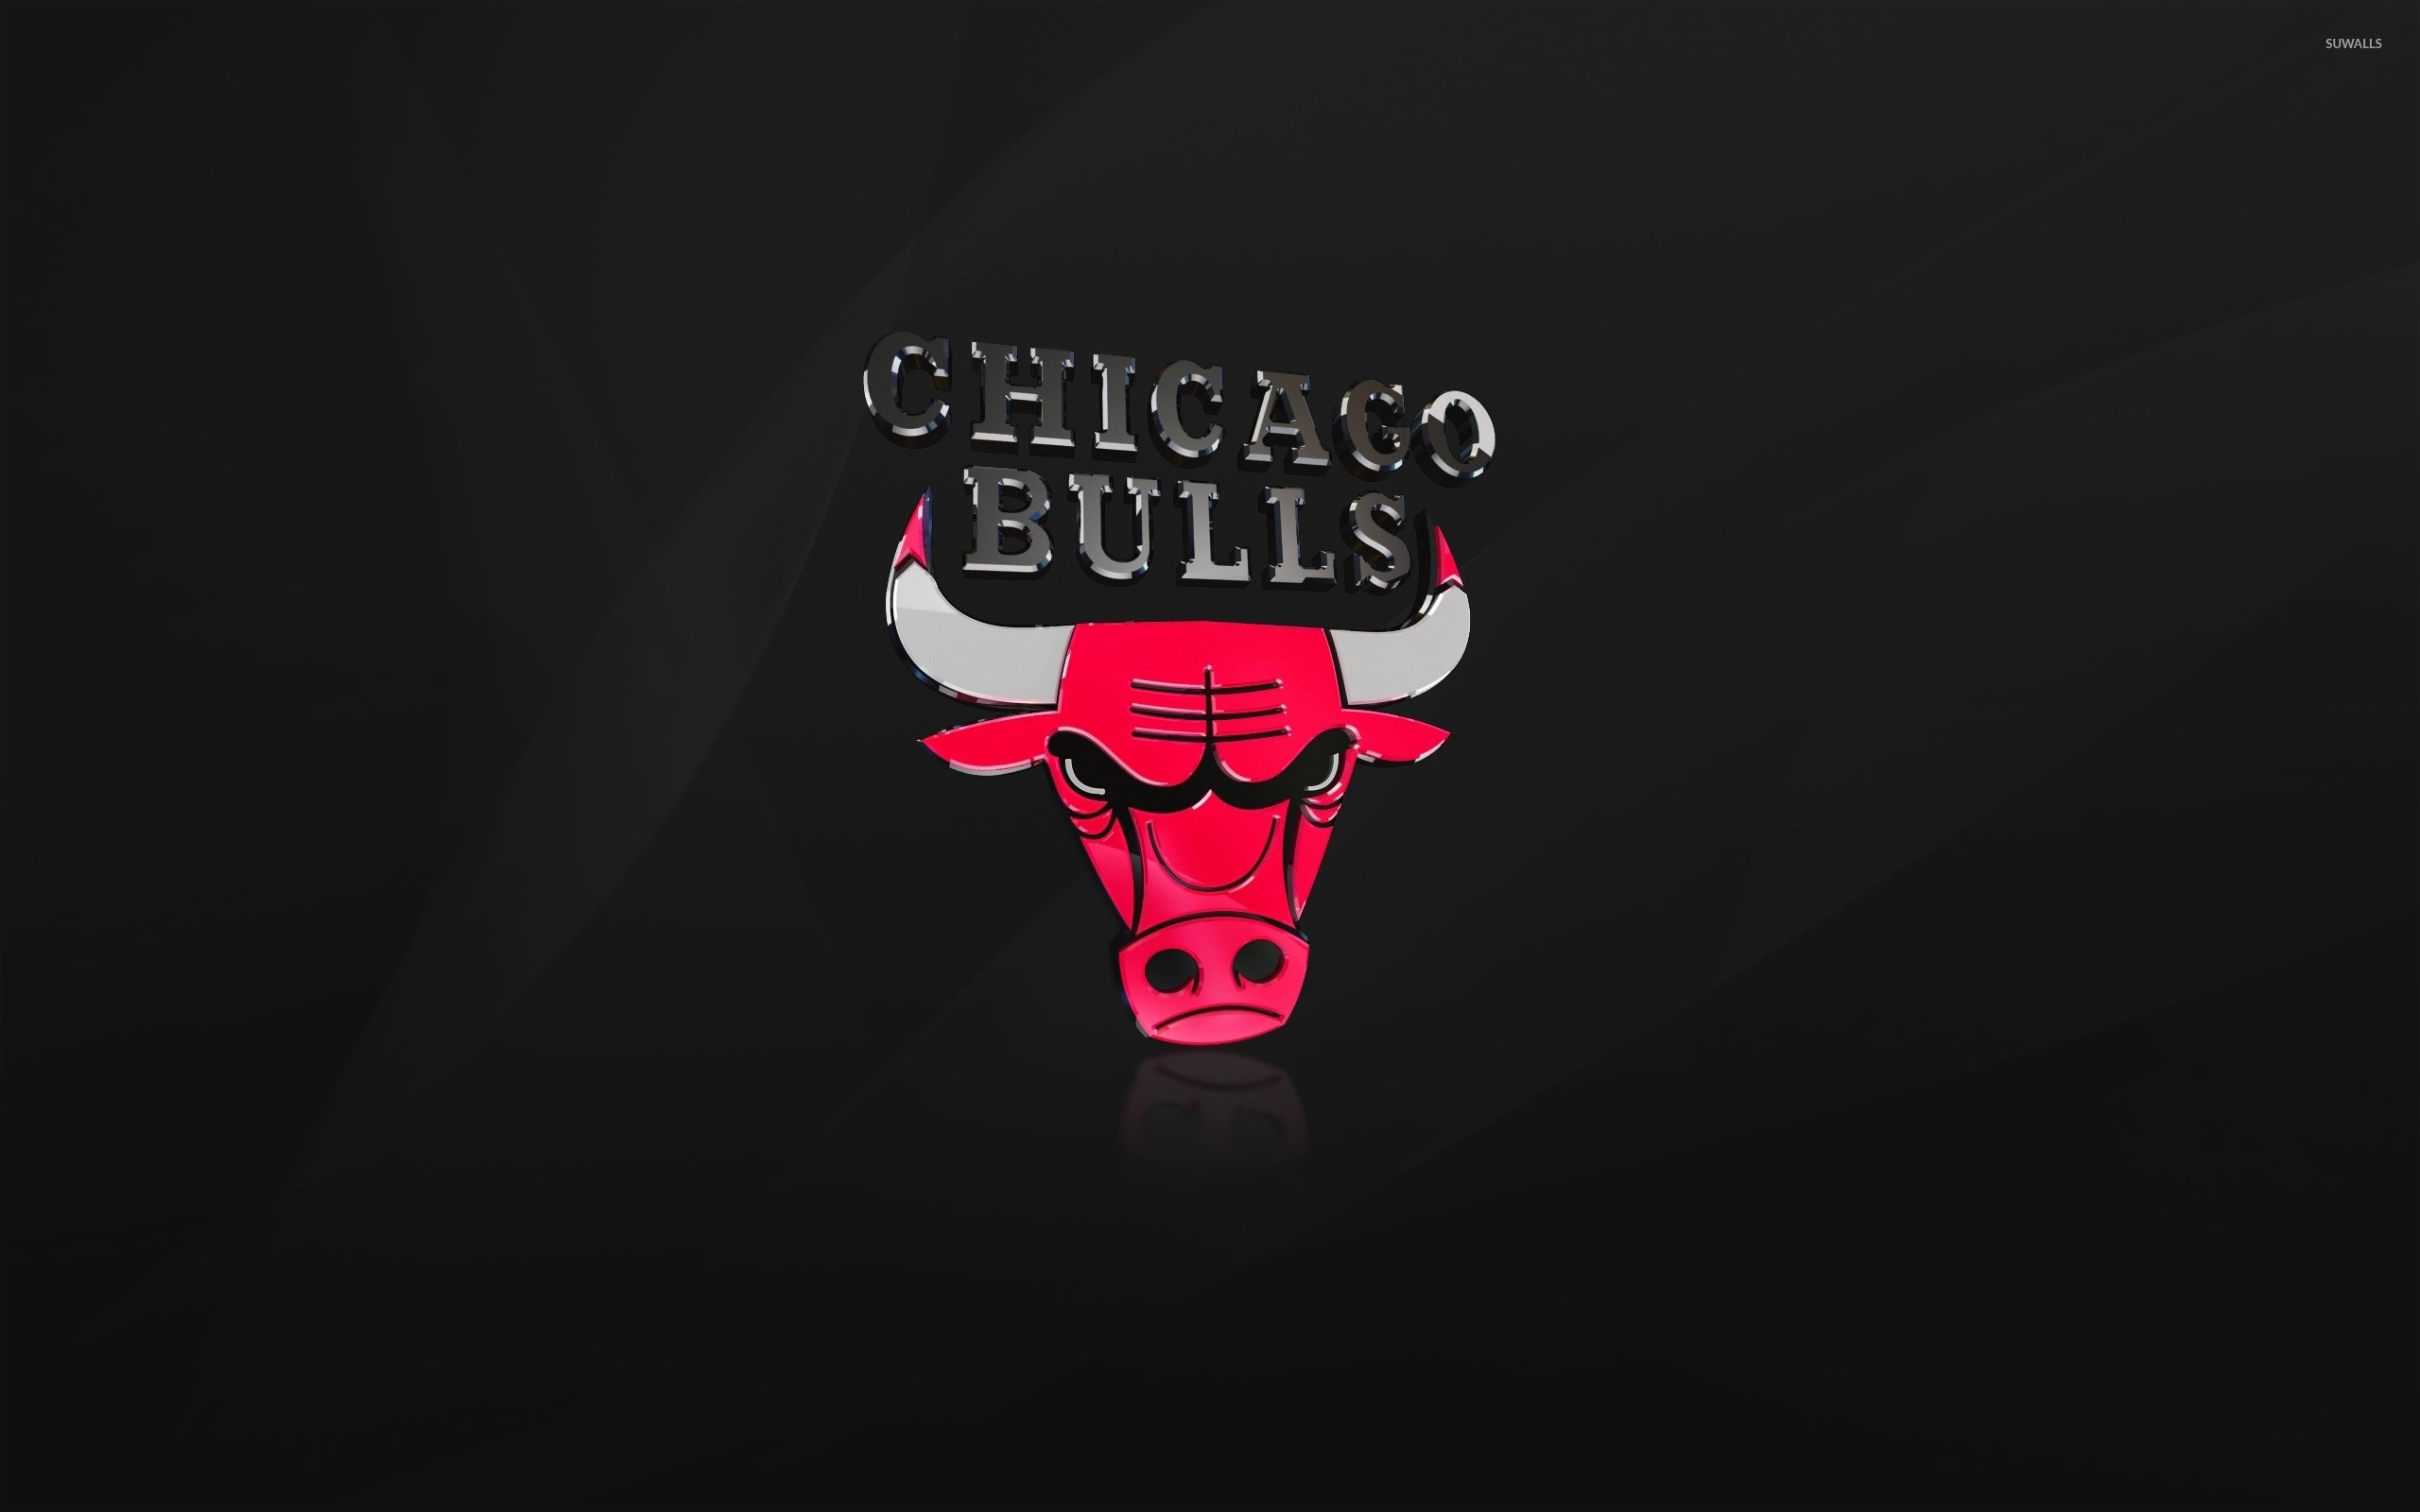 Shiny Chicago Bulls logo wallpaper.